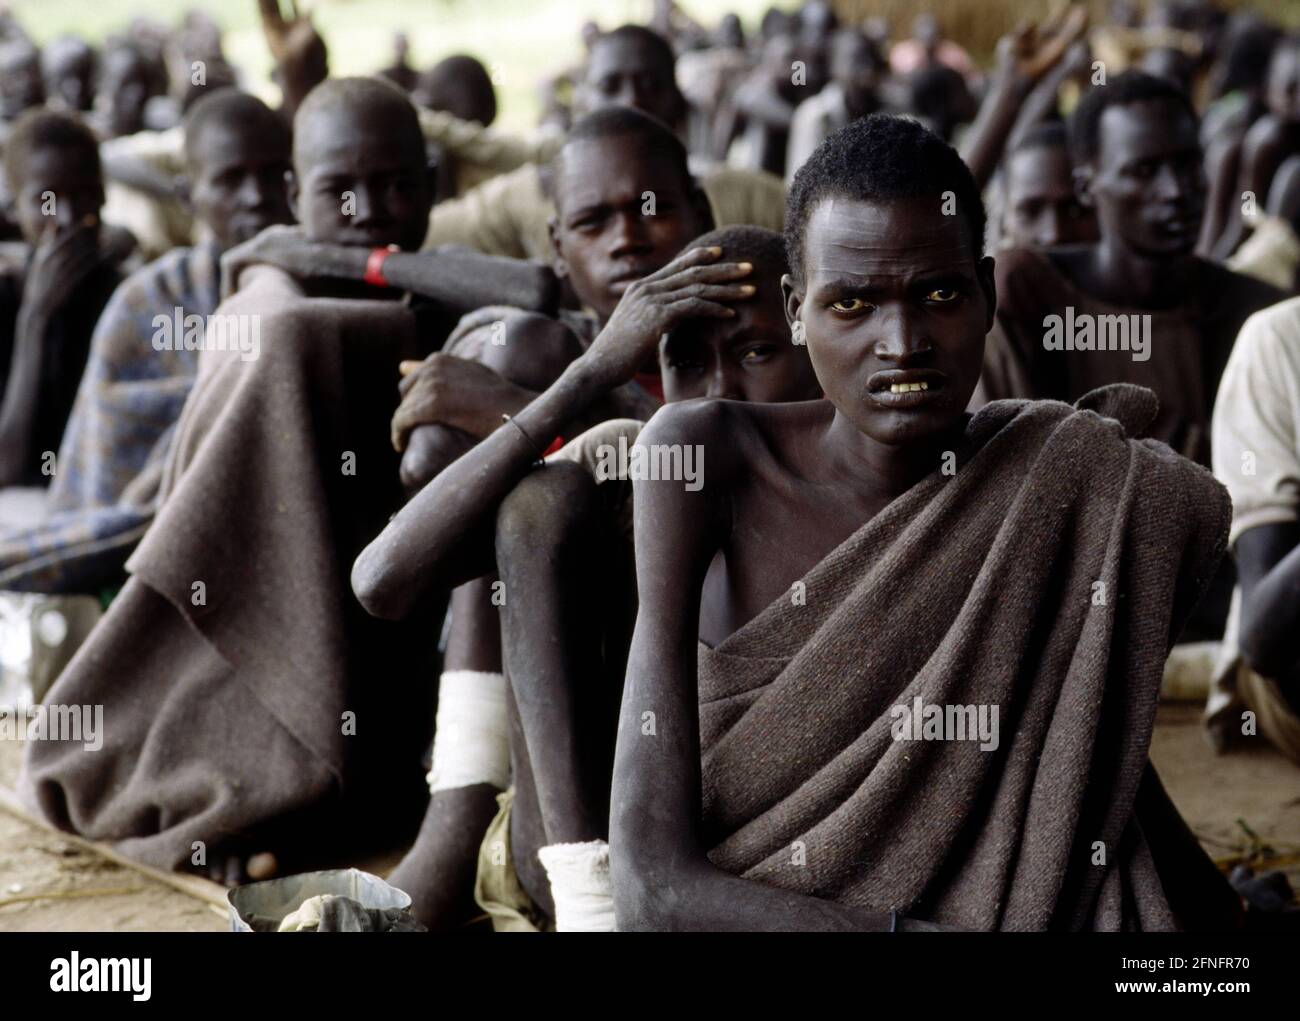 Sudan people